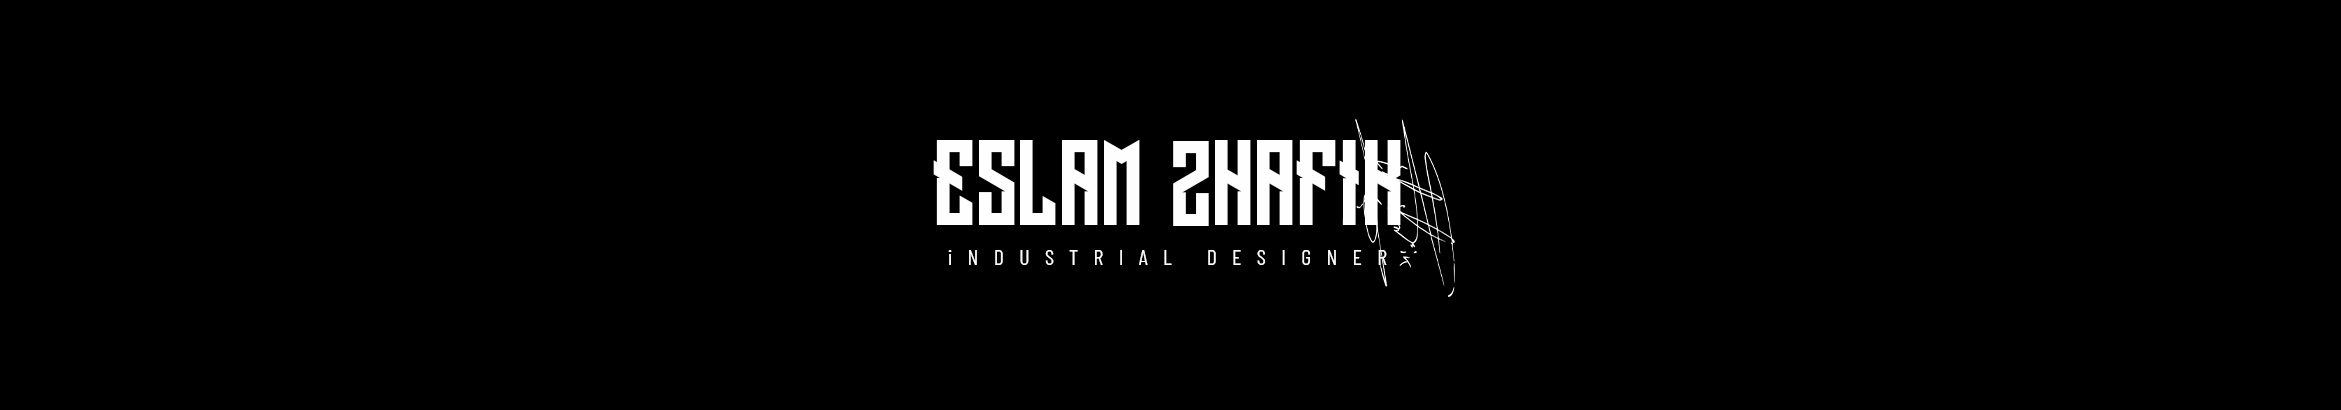 Eslam Shafik's profile banner